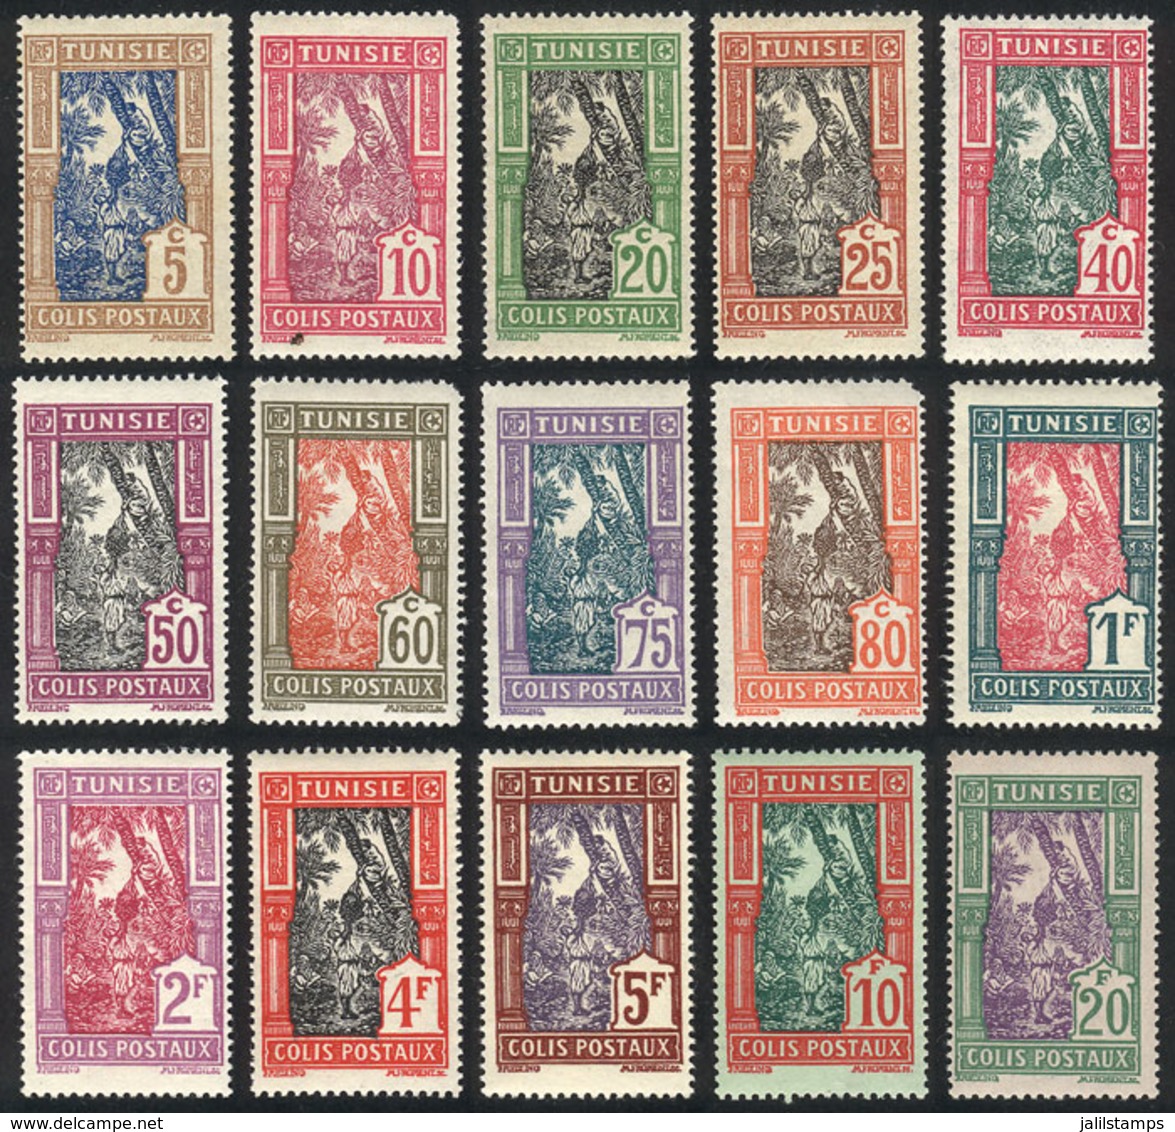 TUNISIA: Yvert 11/25, 1926 Dates, Cmpl. Set Of 15 Mint Values, Very Fine Quality! - Tunisia (1956-...)